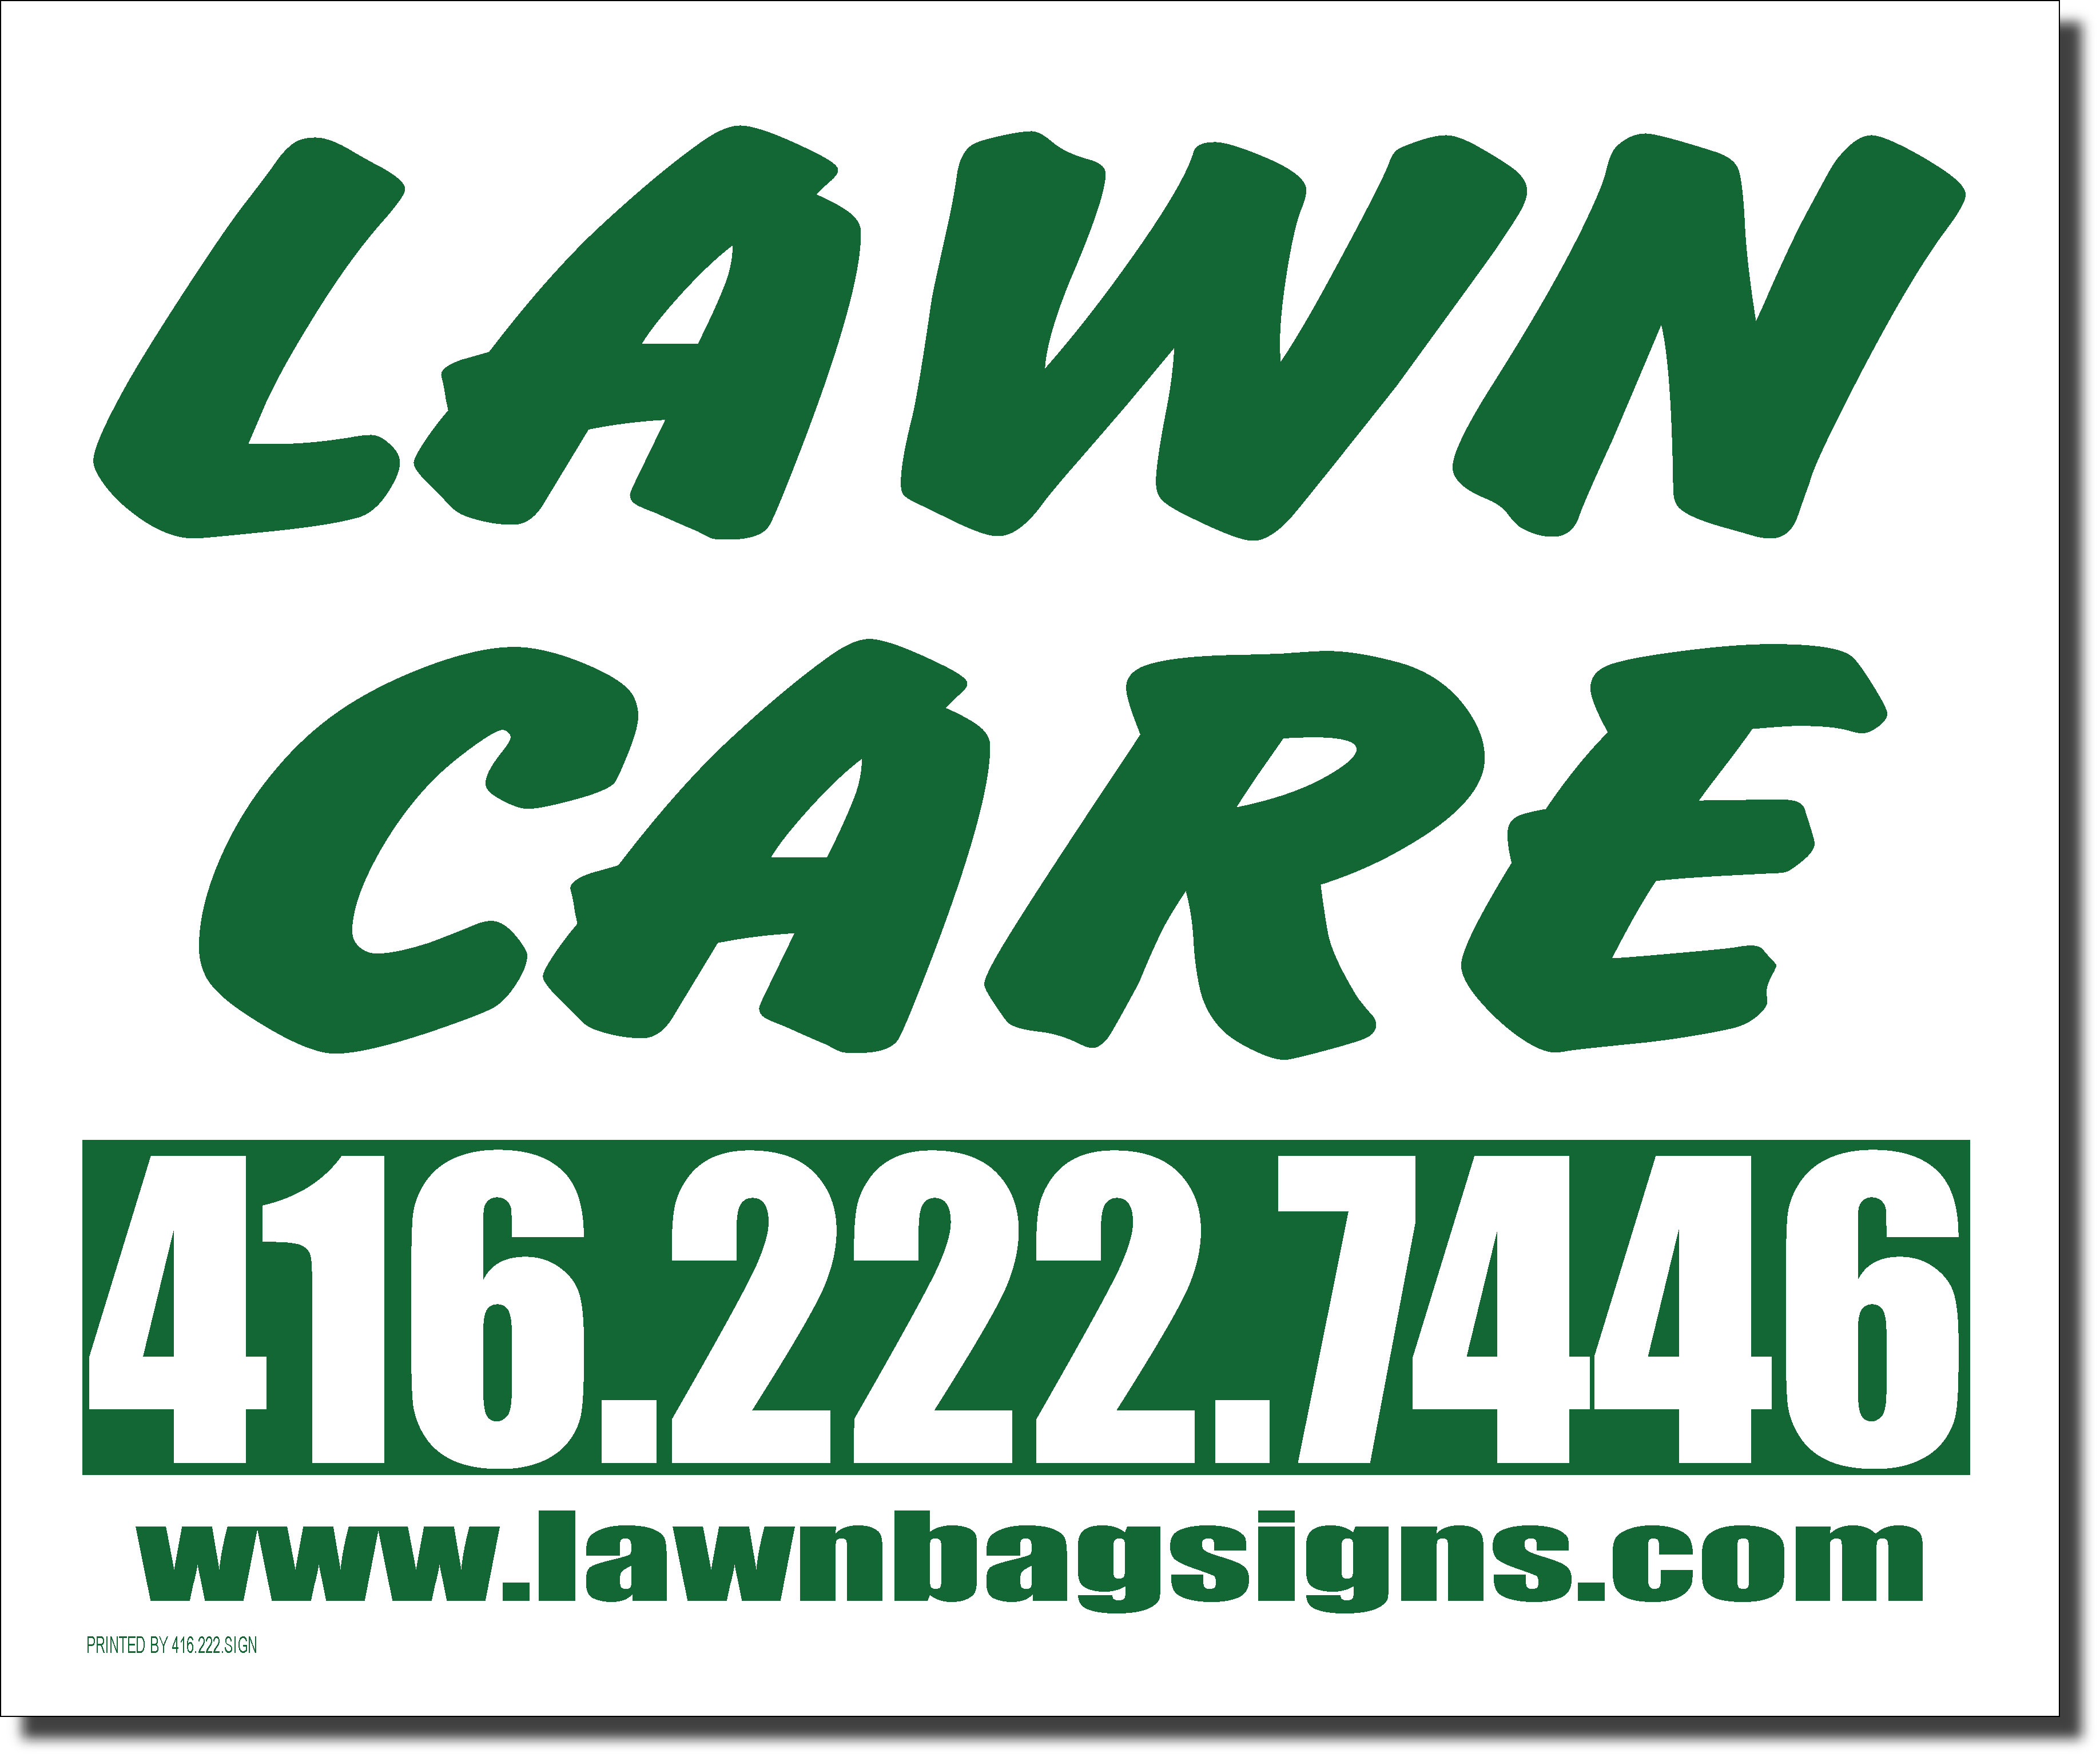 Lawn Care 24 x 20 Lawn Bag